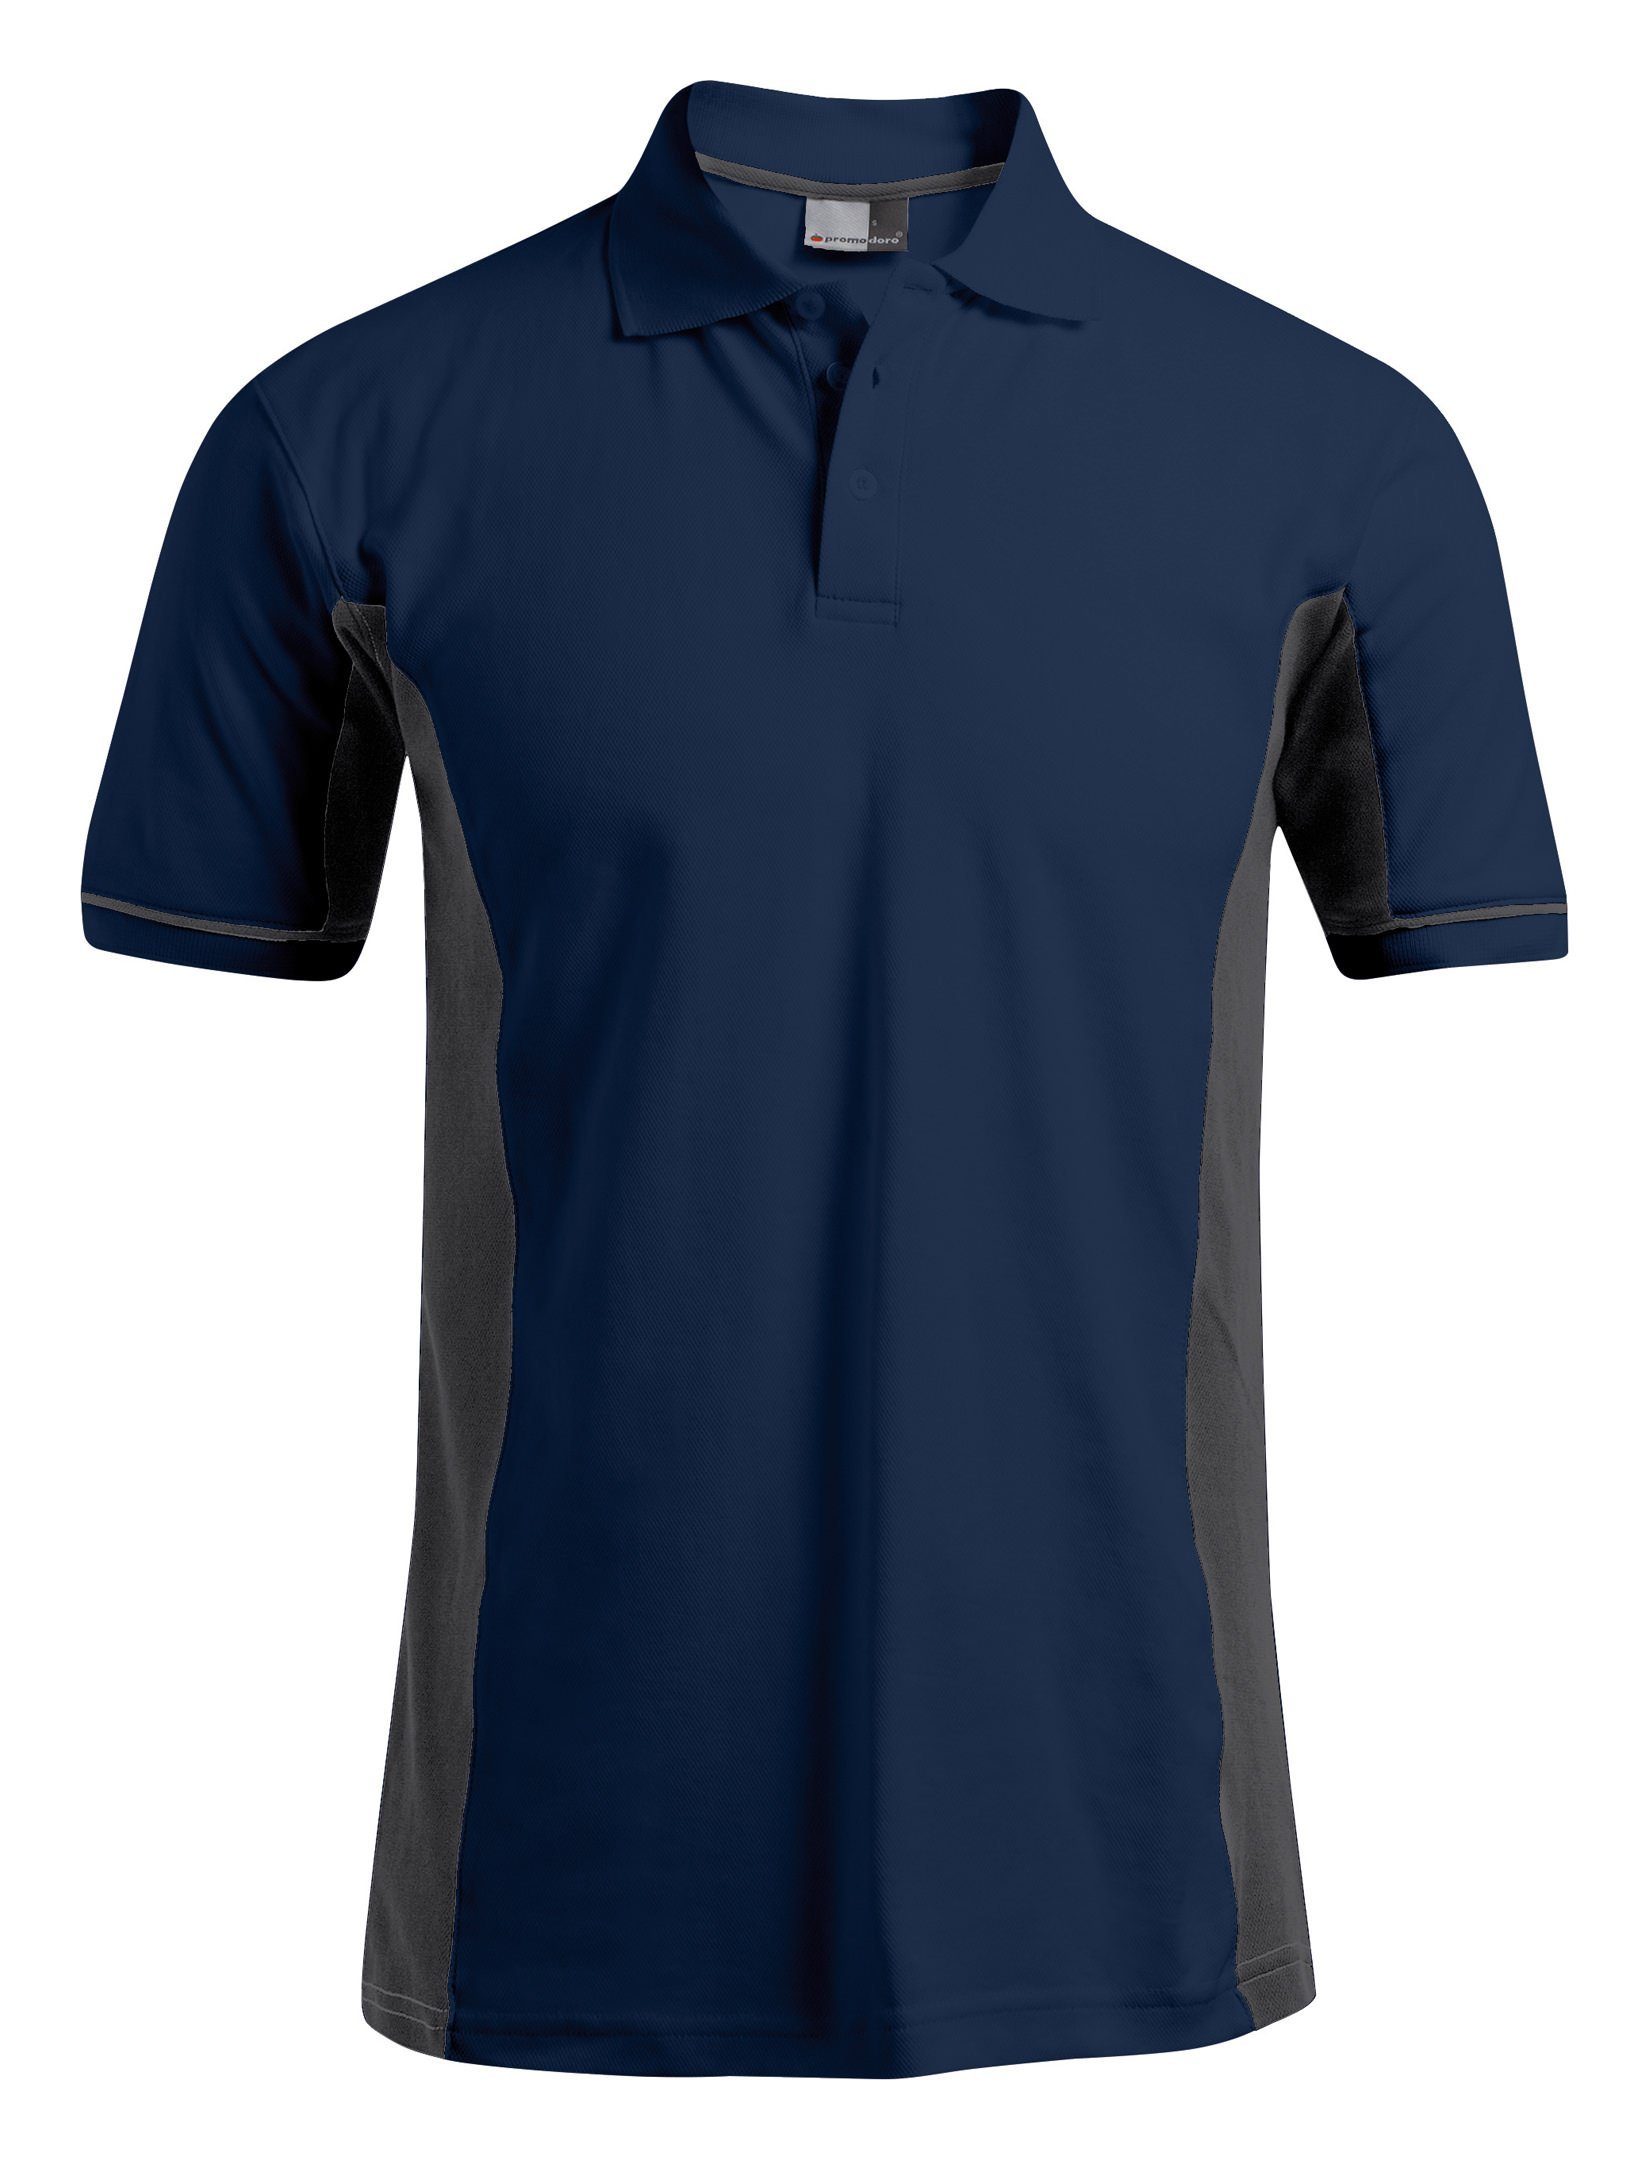 Promodoro Funktionsshirt Poloshirt Function Contrast navy-grau Größe M